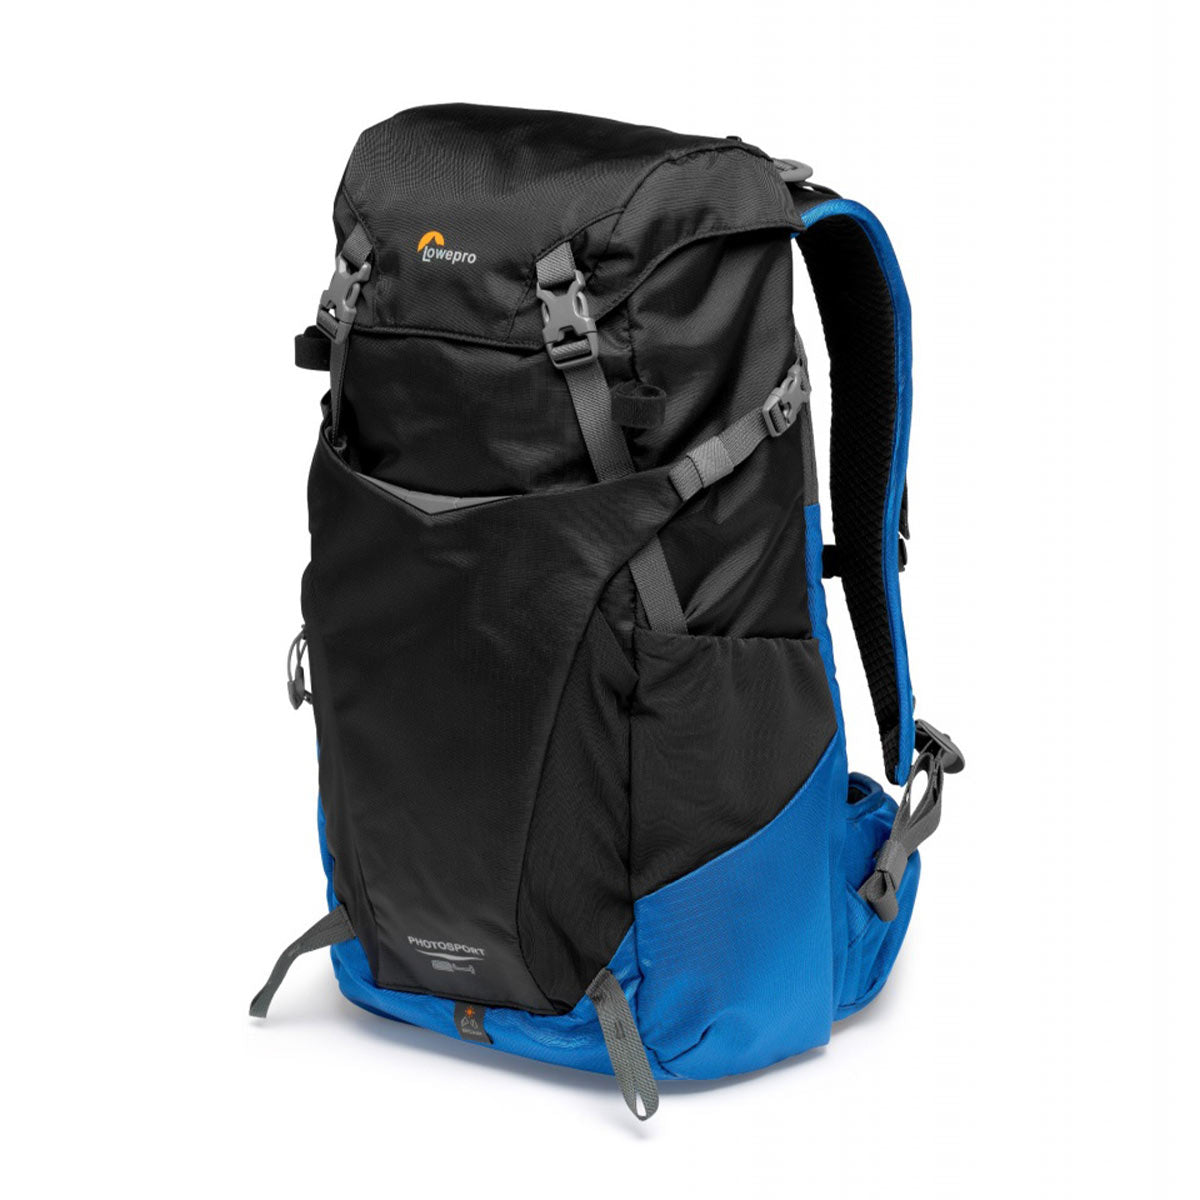 Lowepro PhotoSport Backpack BP 24L AW III (Black/Blue)